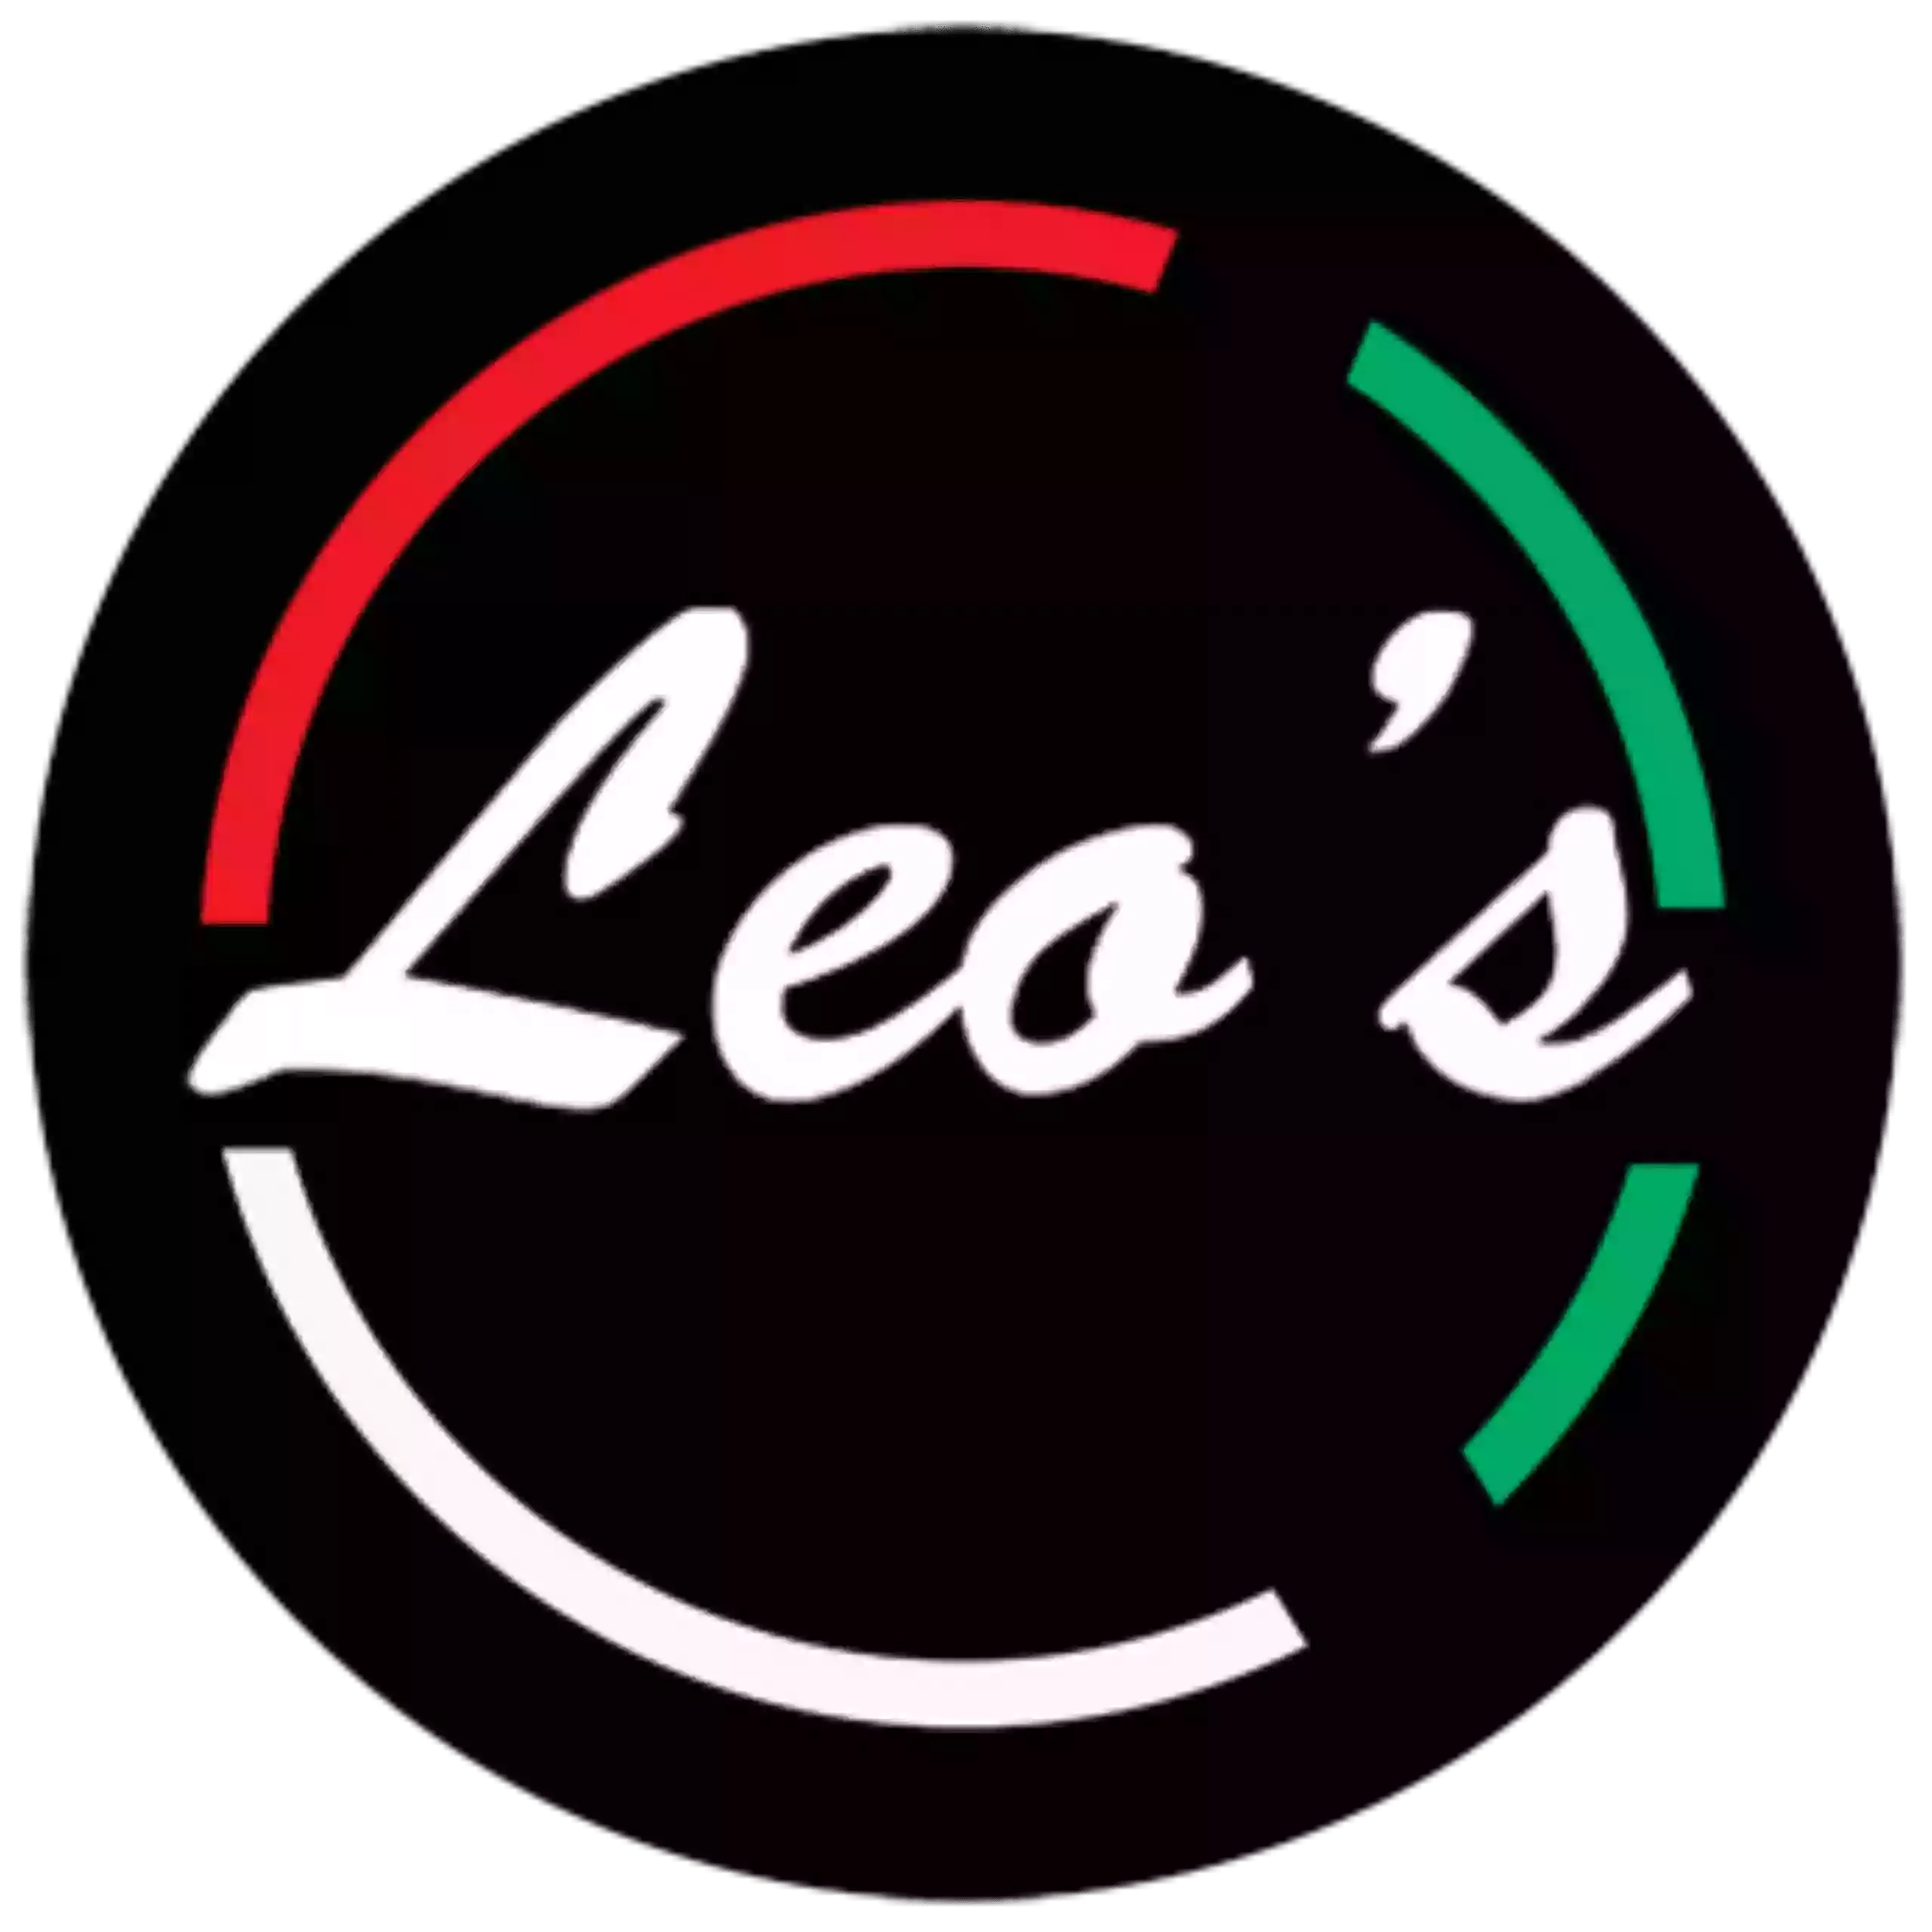 Leo's Restaurant Bar & Grill